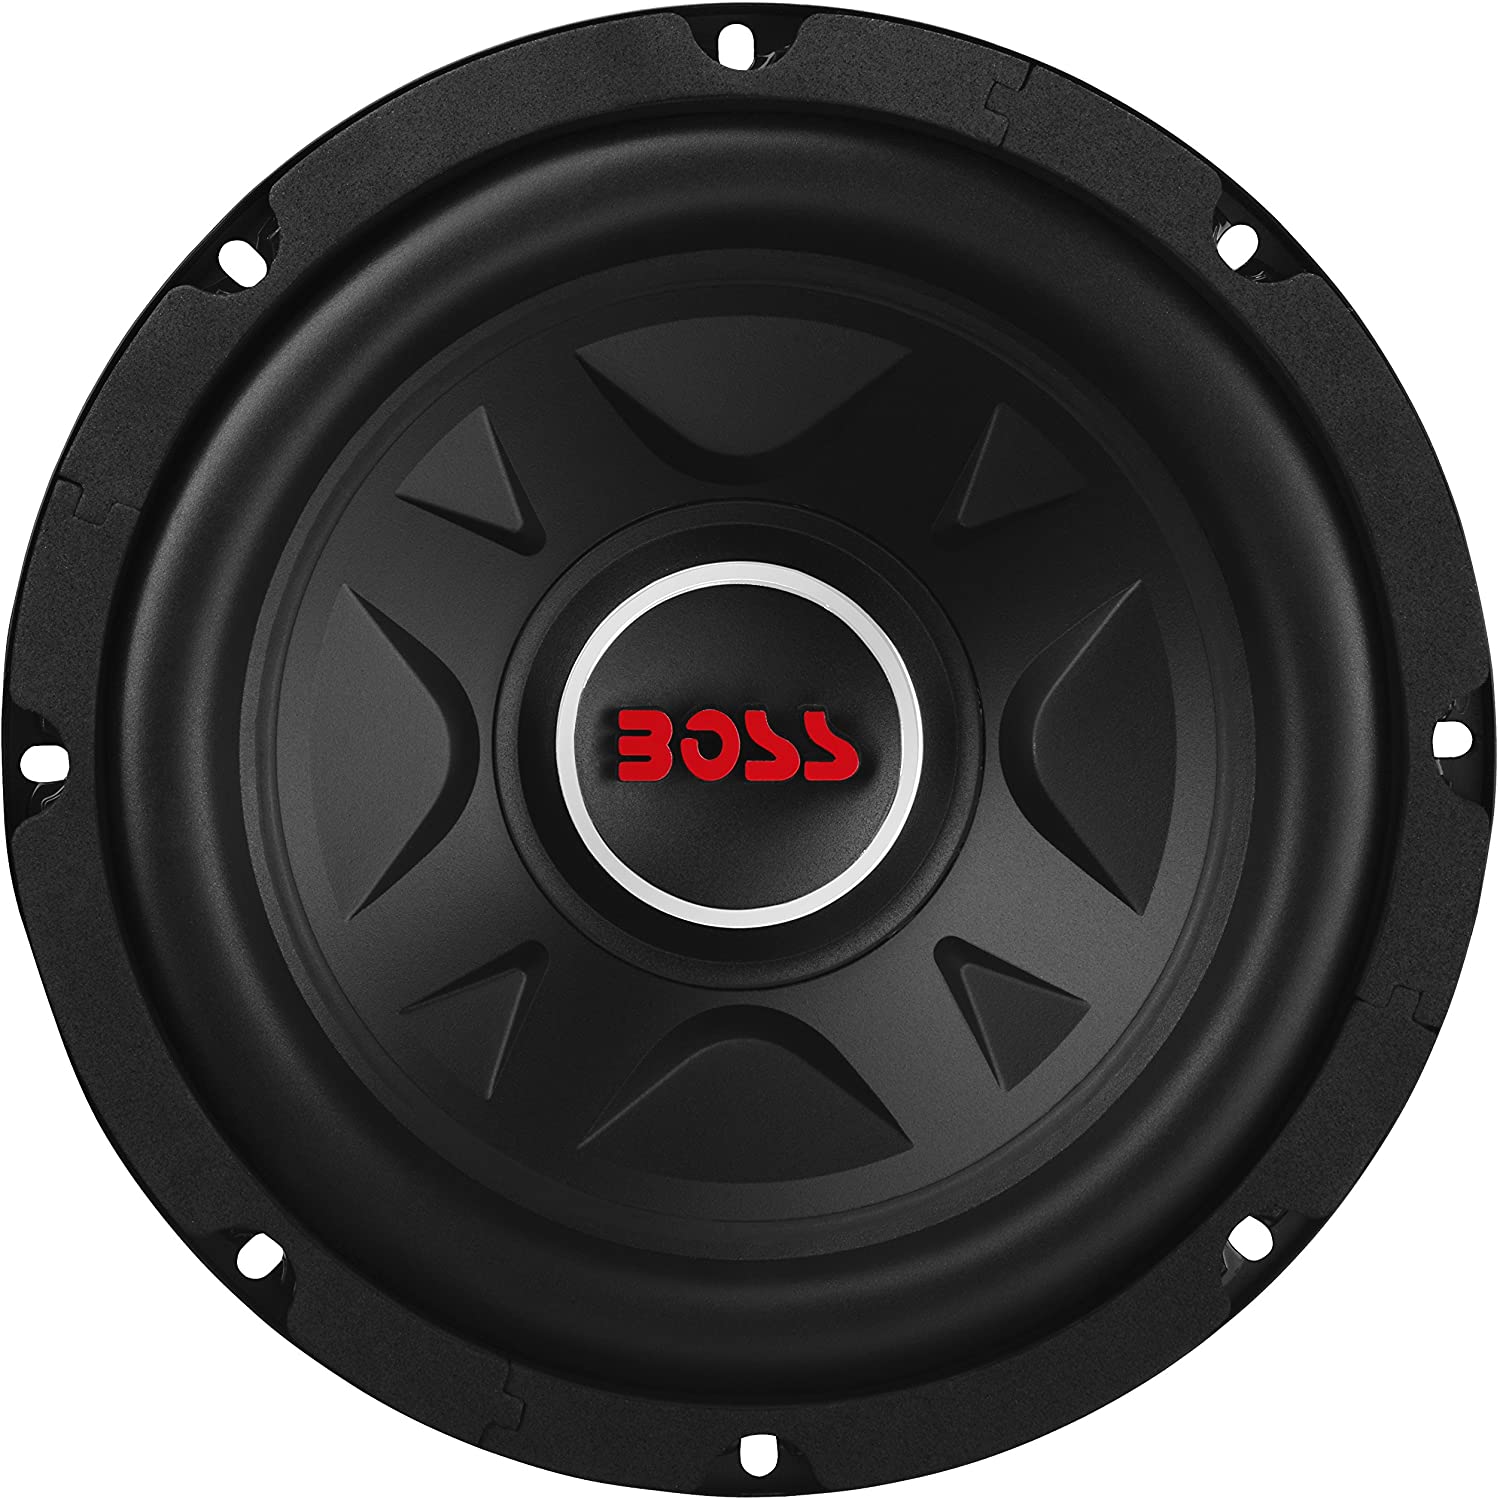 Best 8 inch subwoofer under $100 BOSS Audio Systems Elite BE8D Car Subwoofer